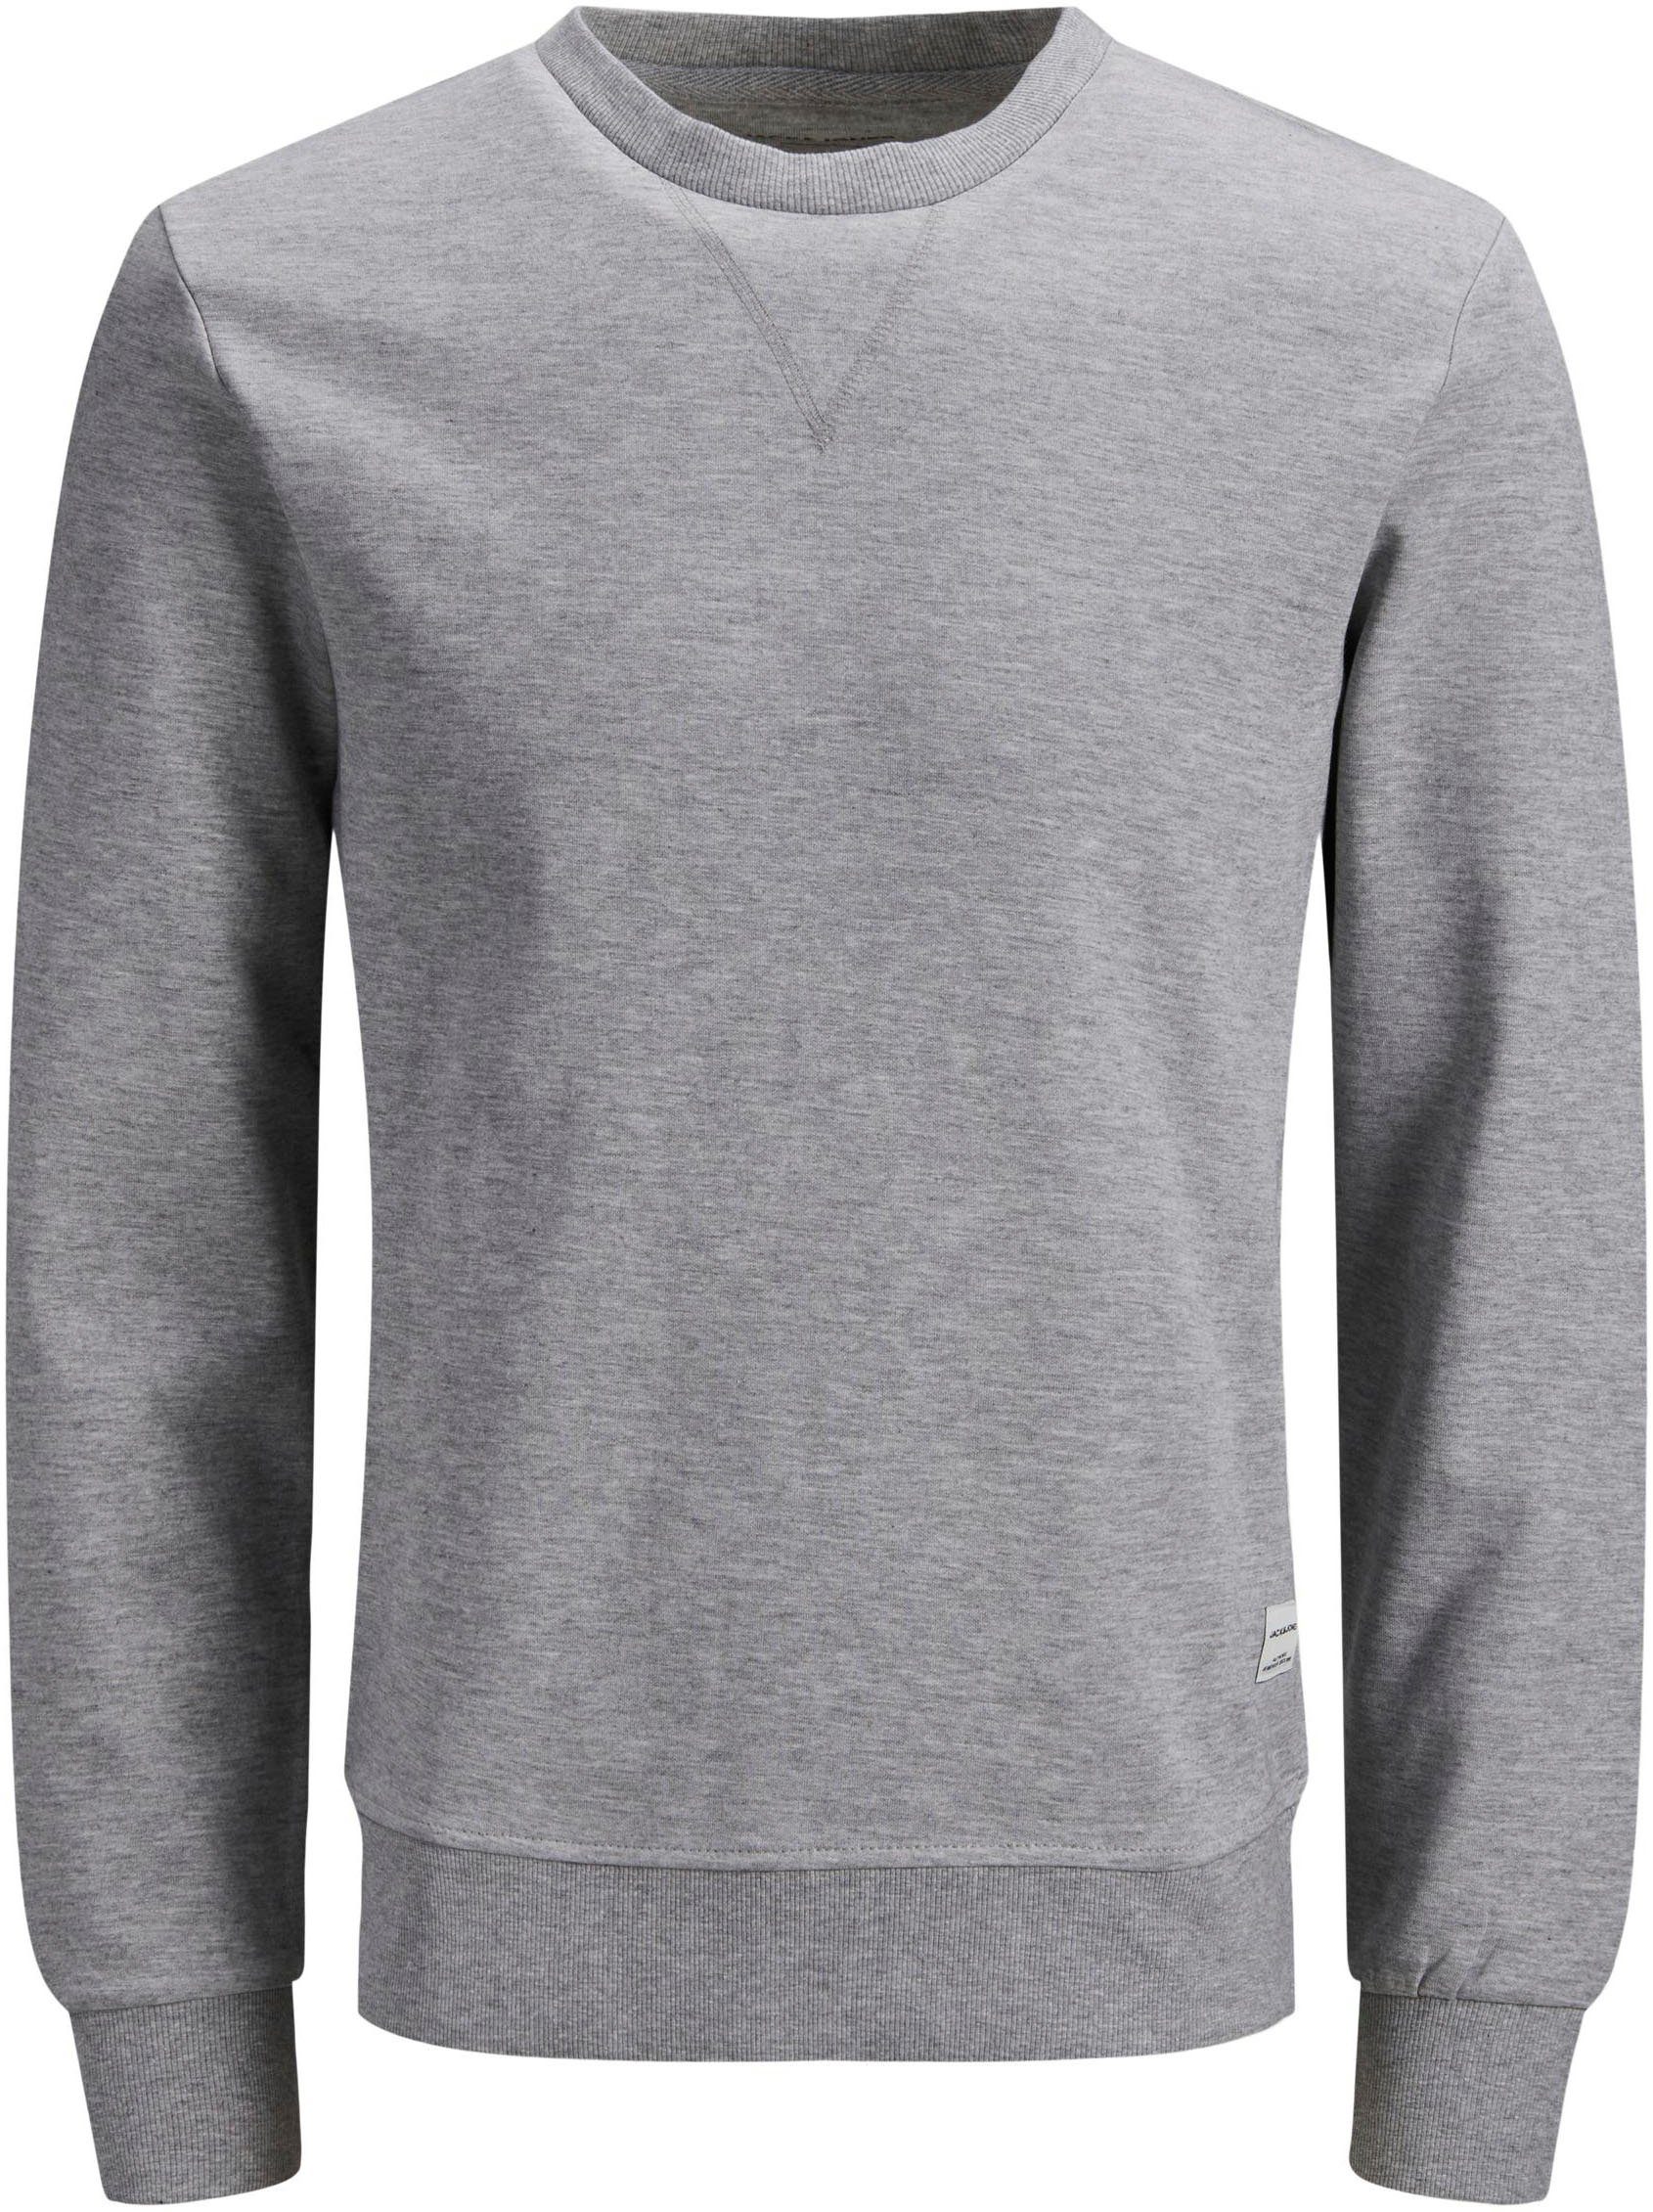 BASIC CREW SWEAT & PlusSize Jones hellgrau-meliert Sweatshirt (Packung) NECK Jack